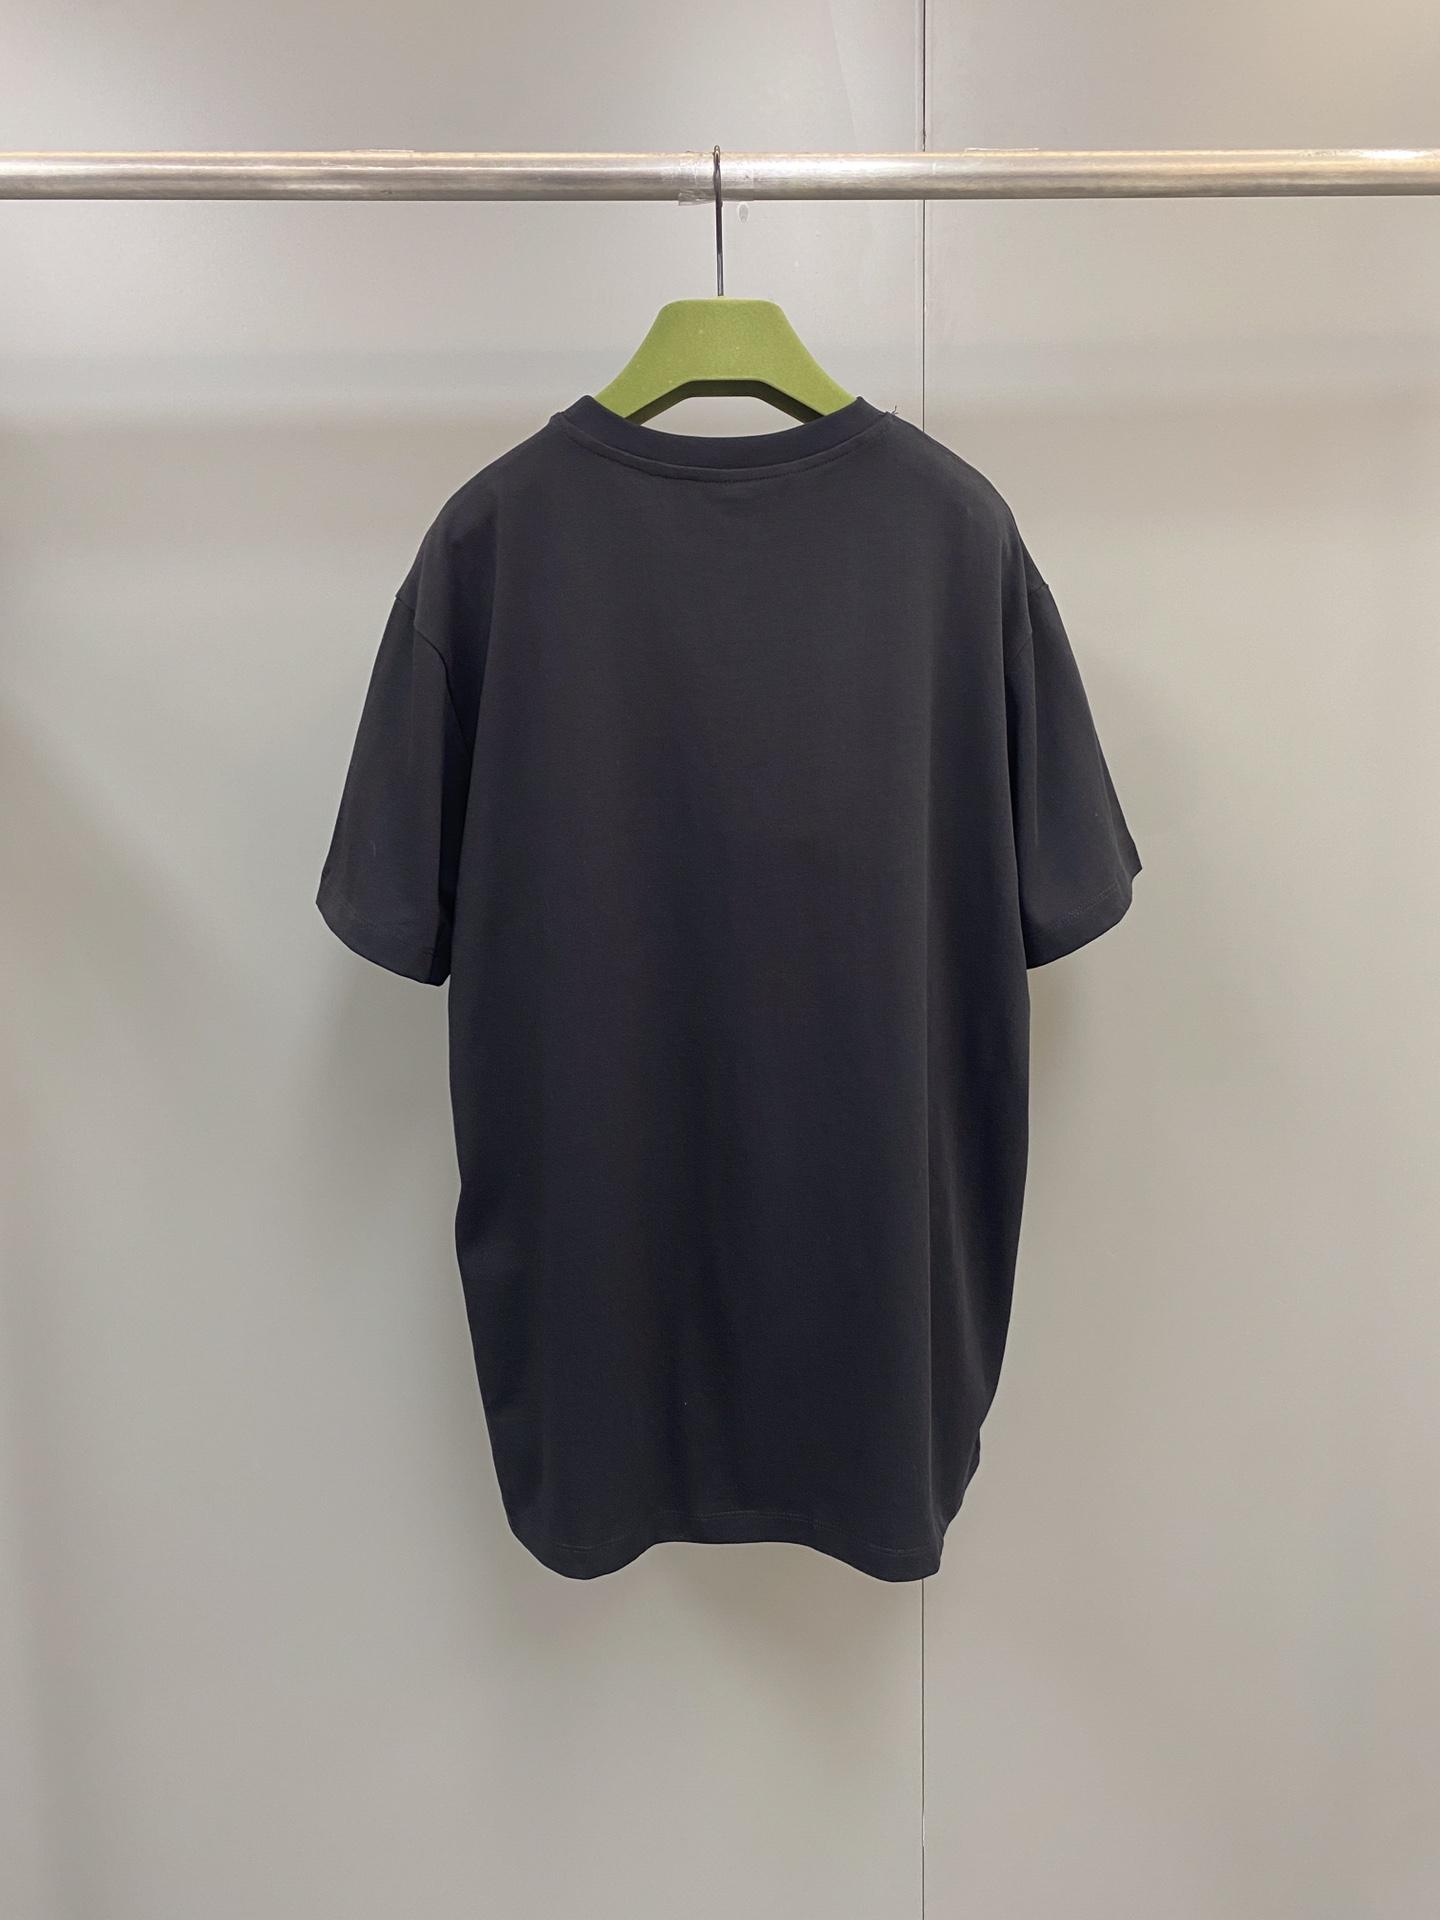 round-gg-print-cotton-t-shirt-6742_16845015003-1000